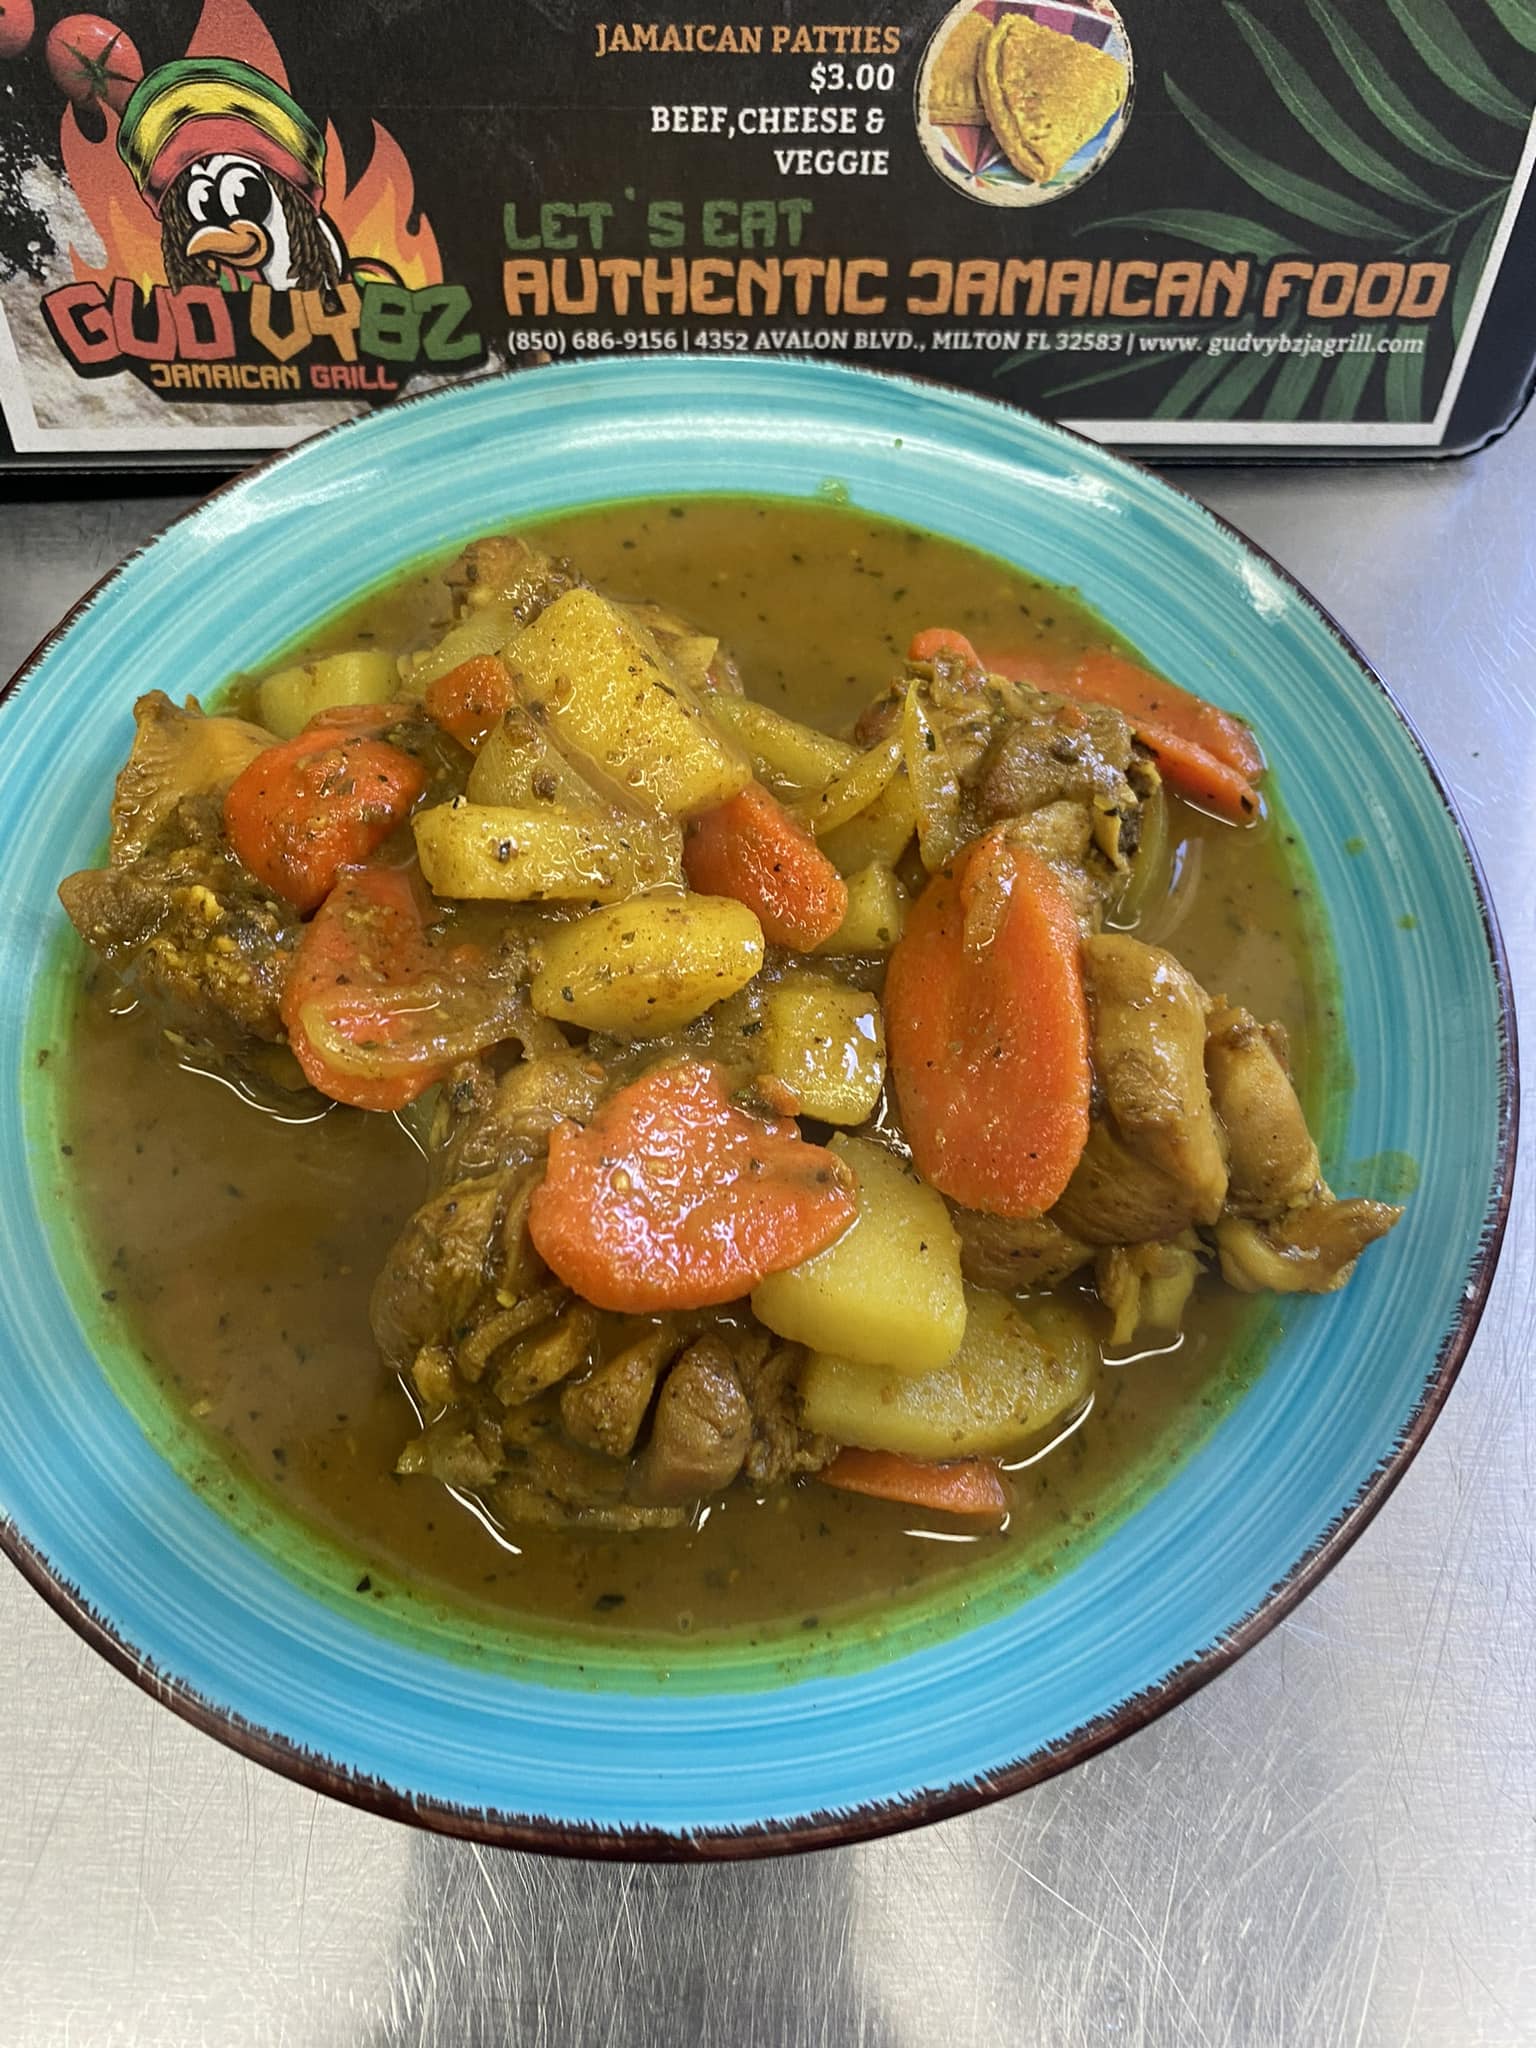 Gud Vybz Jamaican Grill